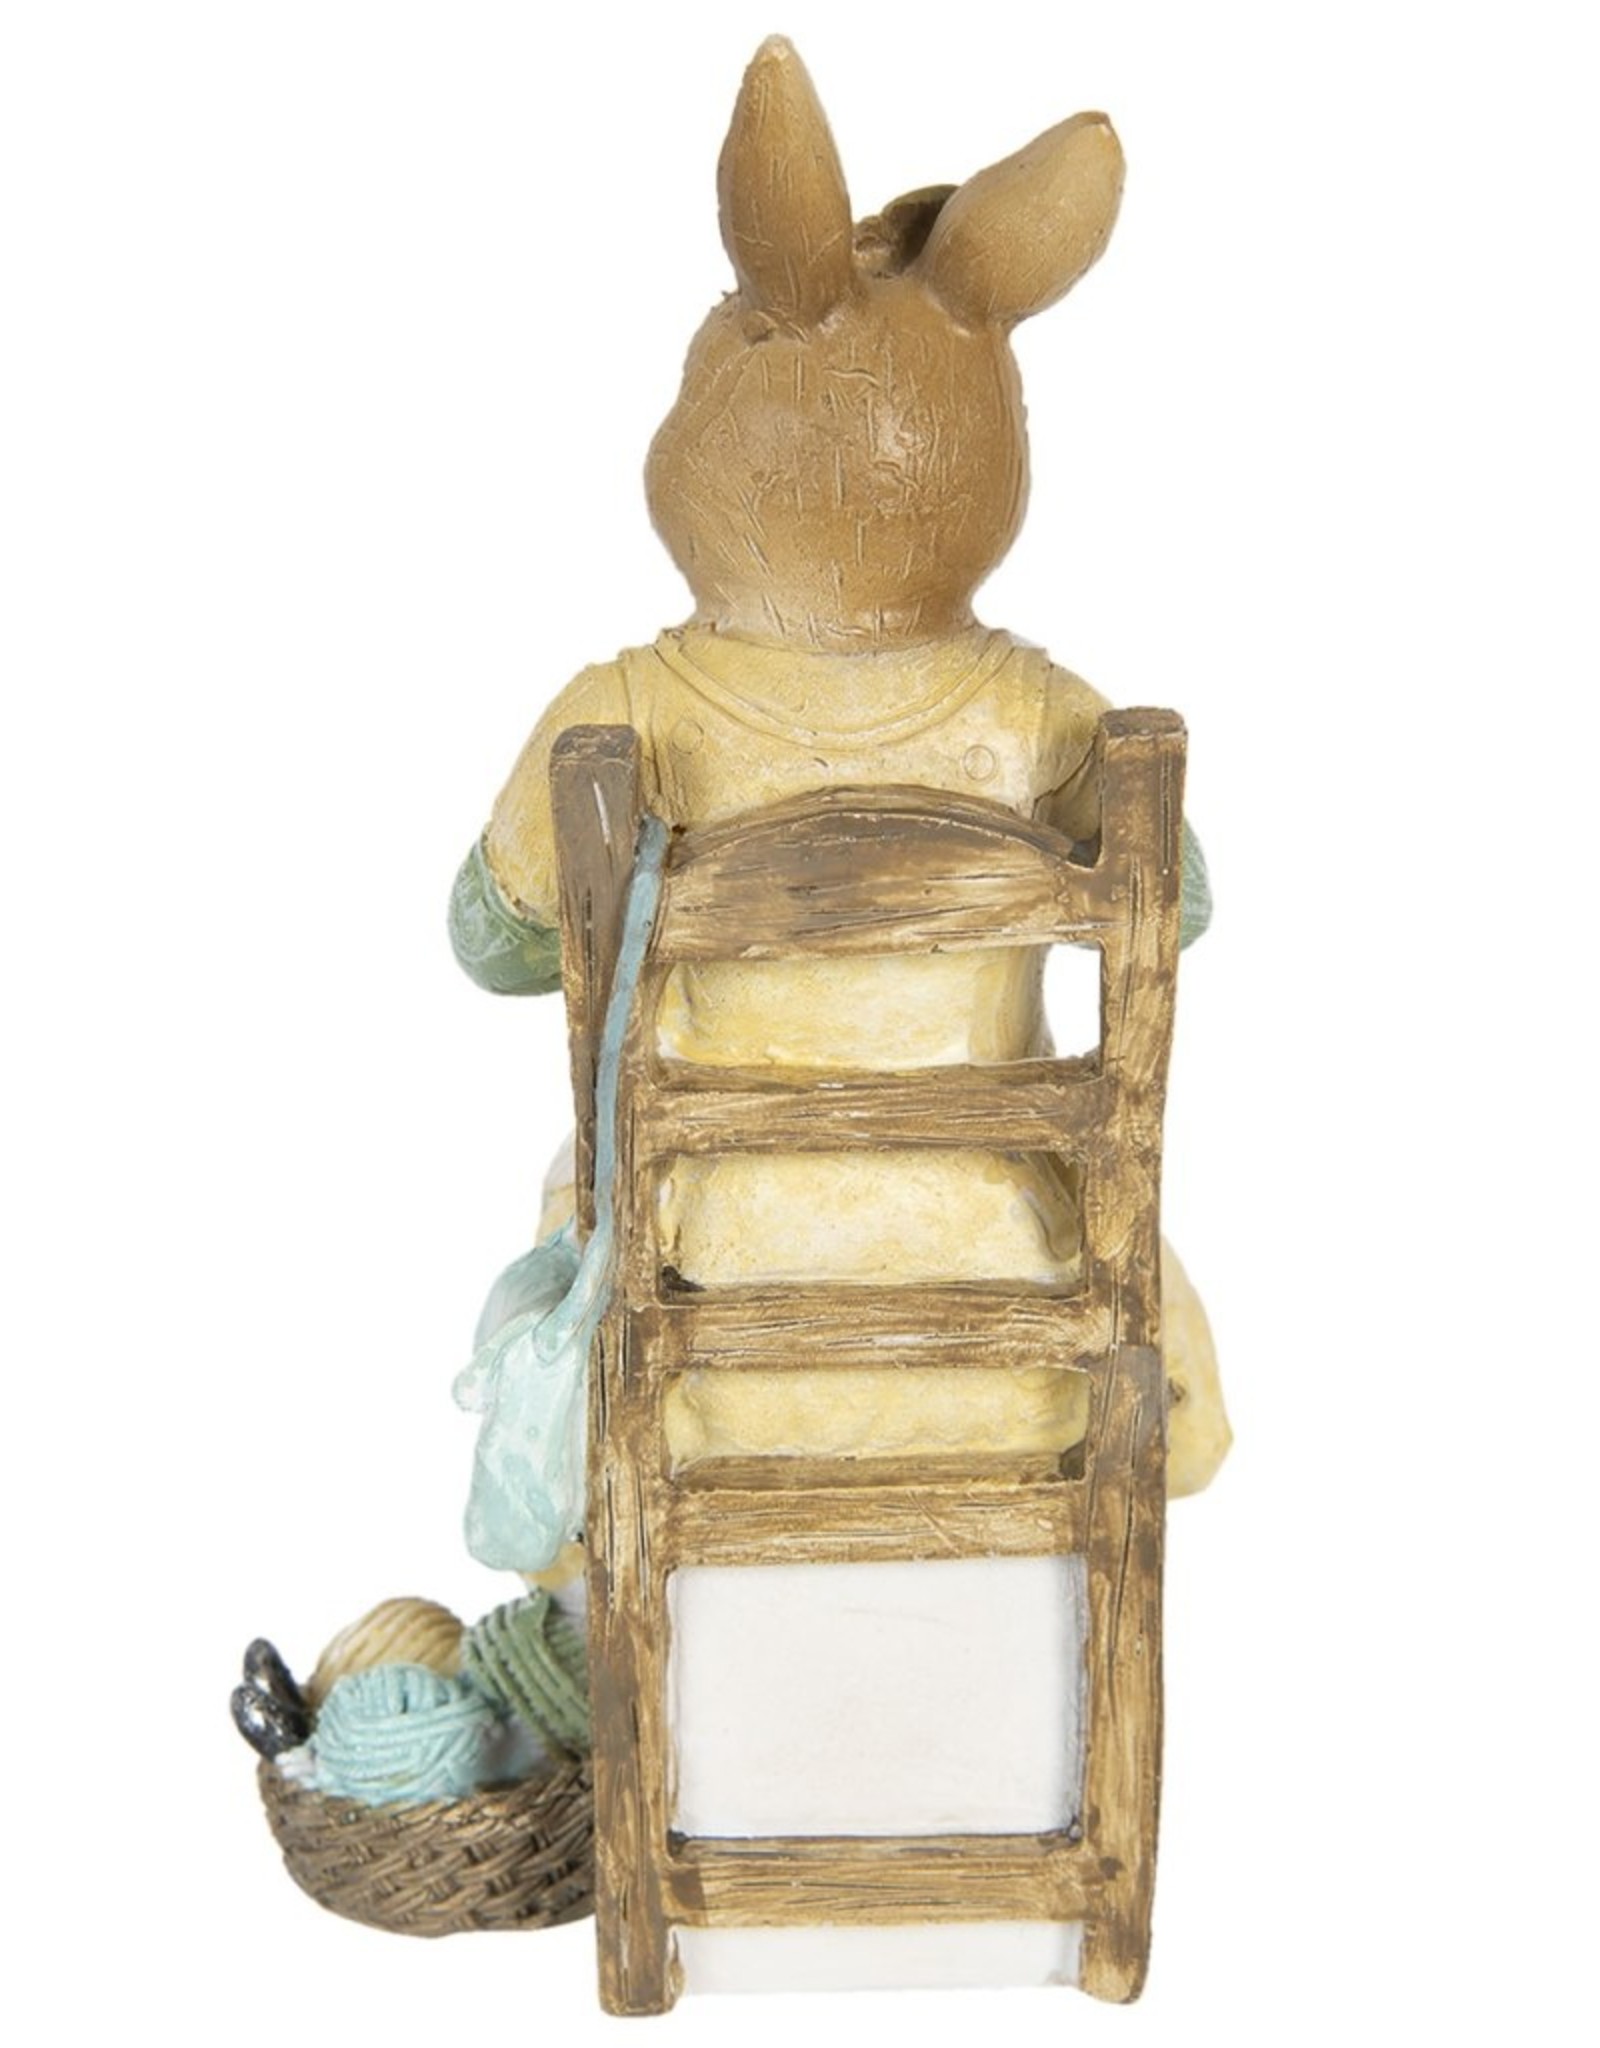 C&E Giftware & Lifestyle - Rabbit Girl sitting on chair knitting figurine 18cm